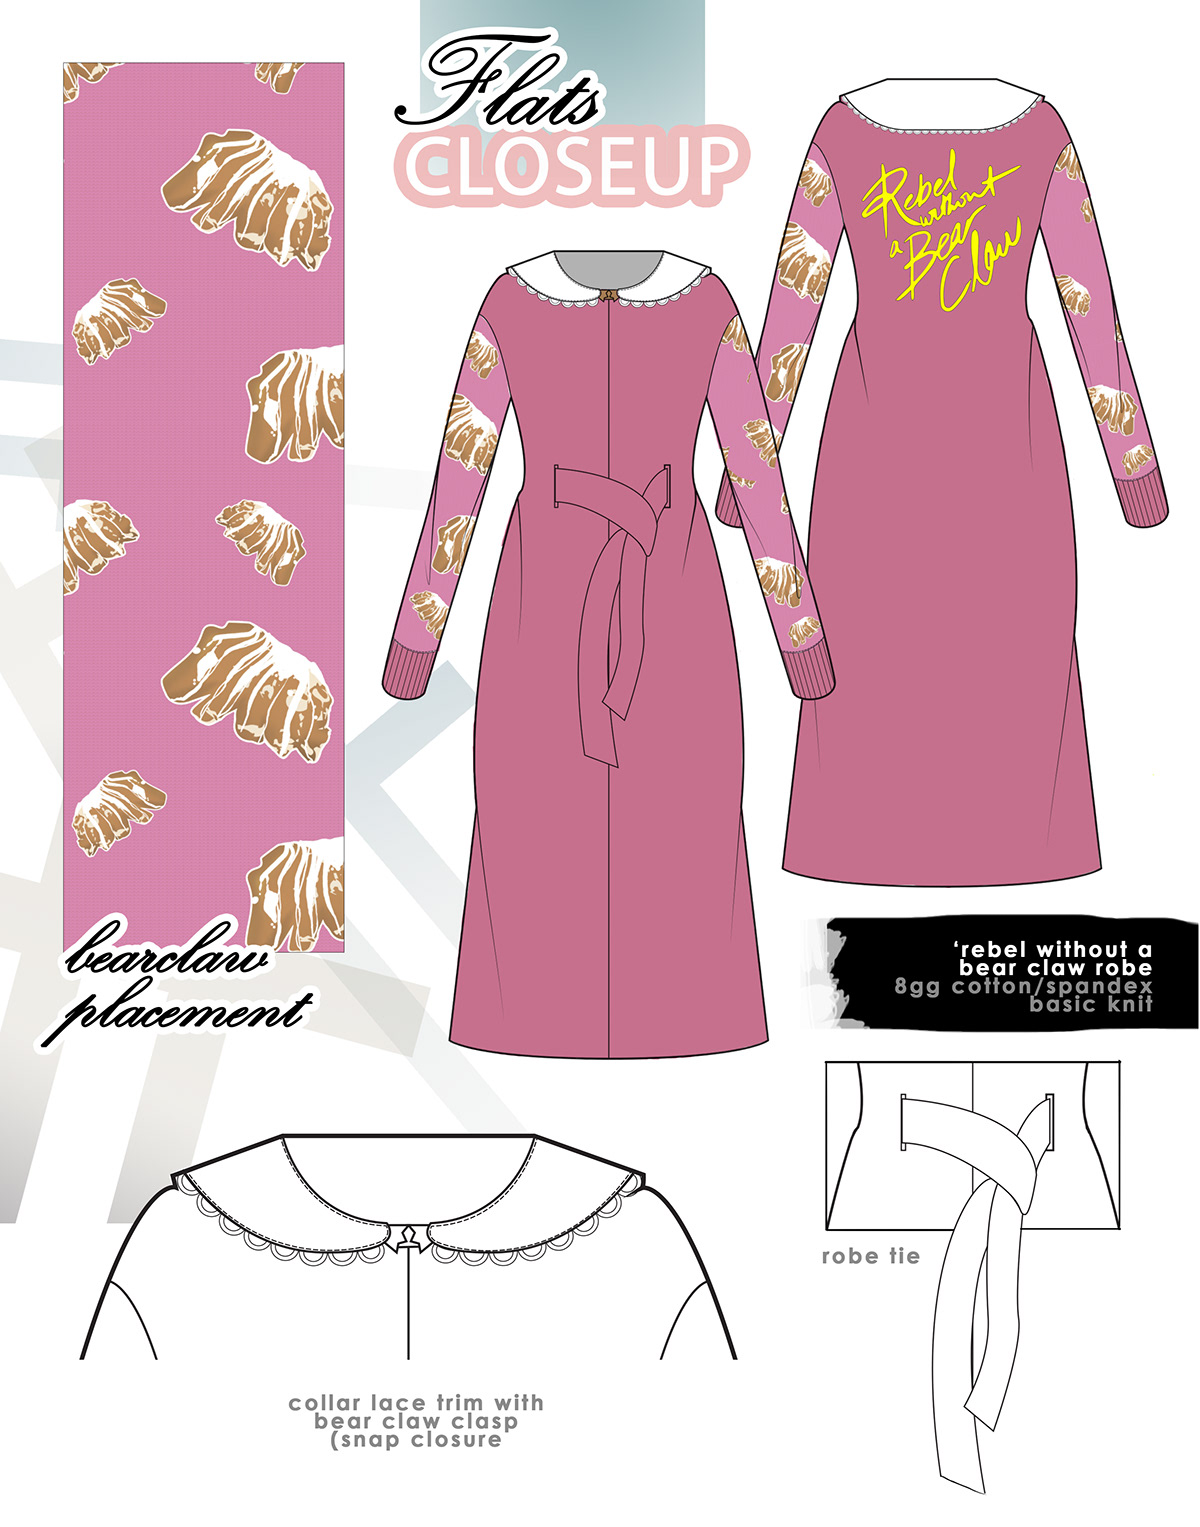 modcloth Annalise Lao Private label fashion design goldilocks fairytale 1950s vintage Badass Babe